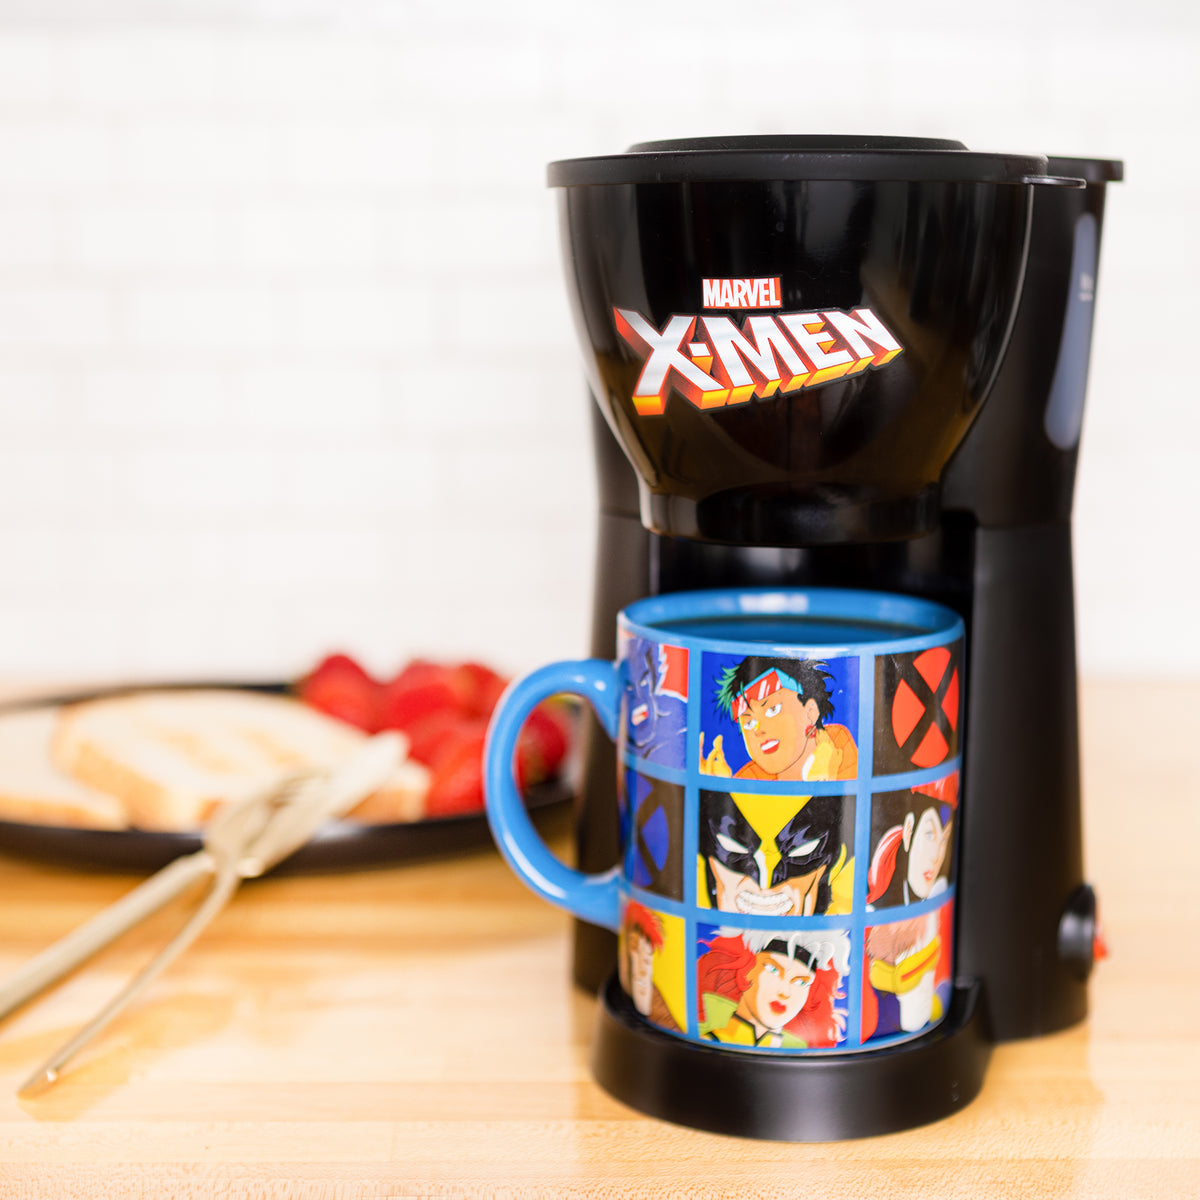 Marvel X-Men Coffee Maker Set